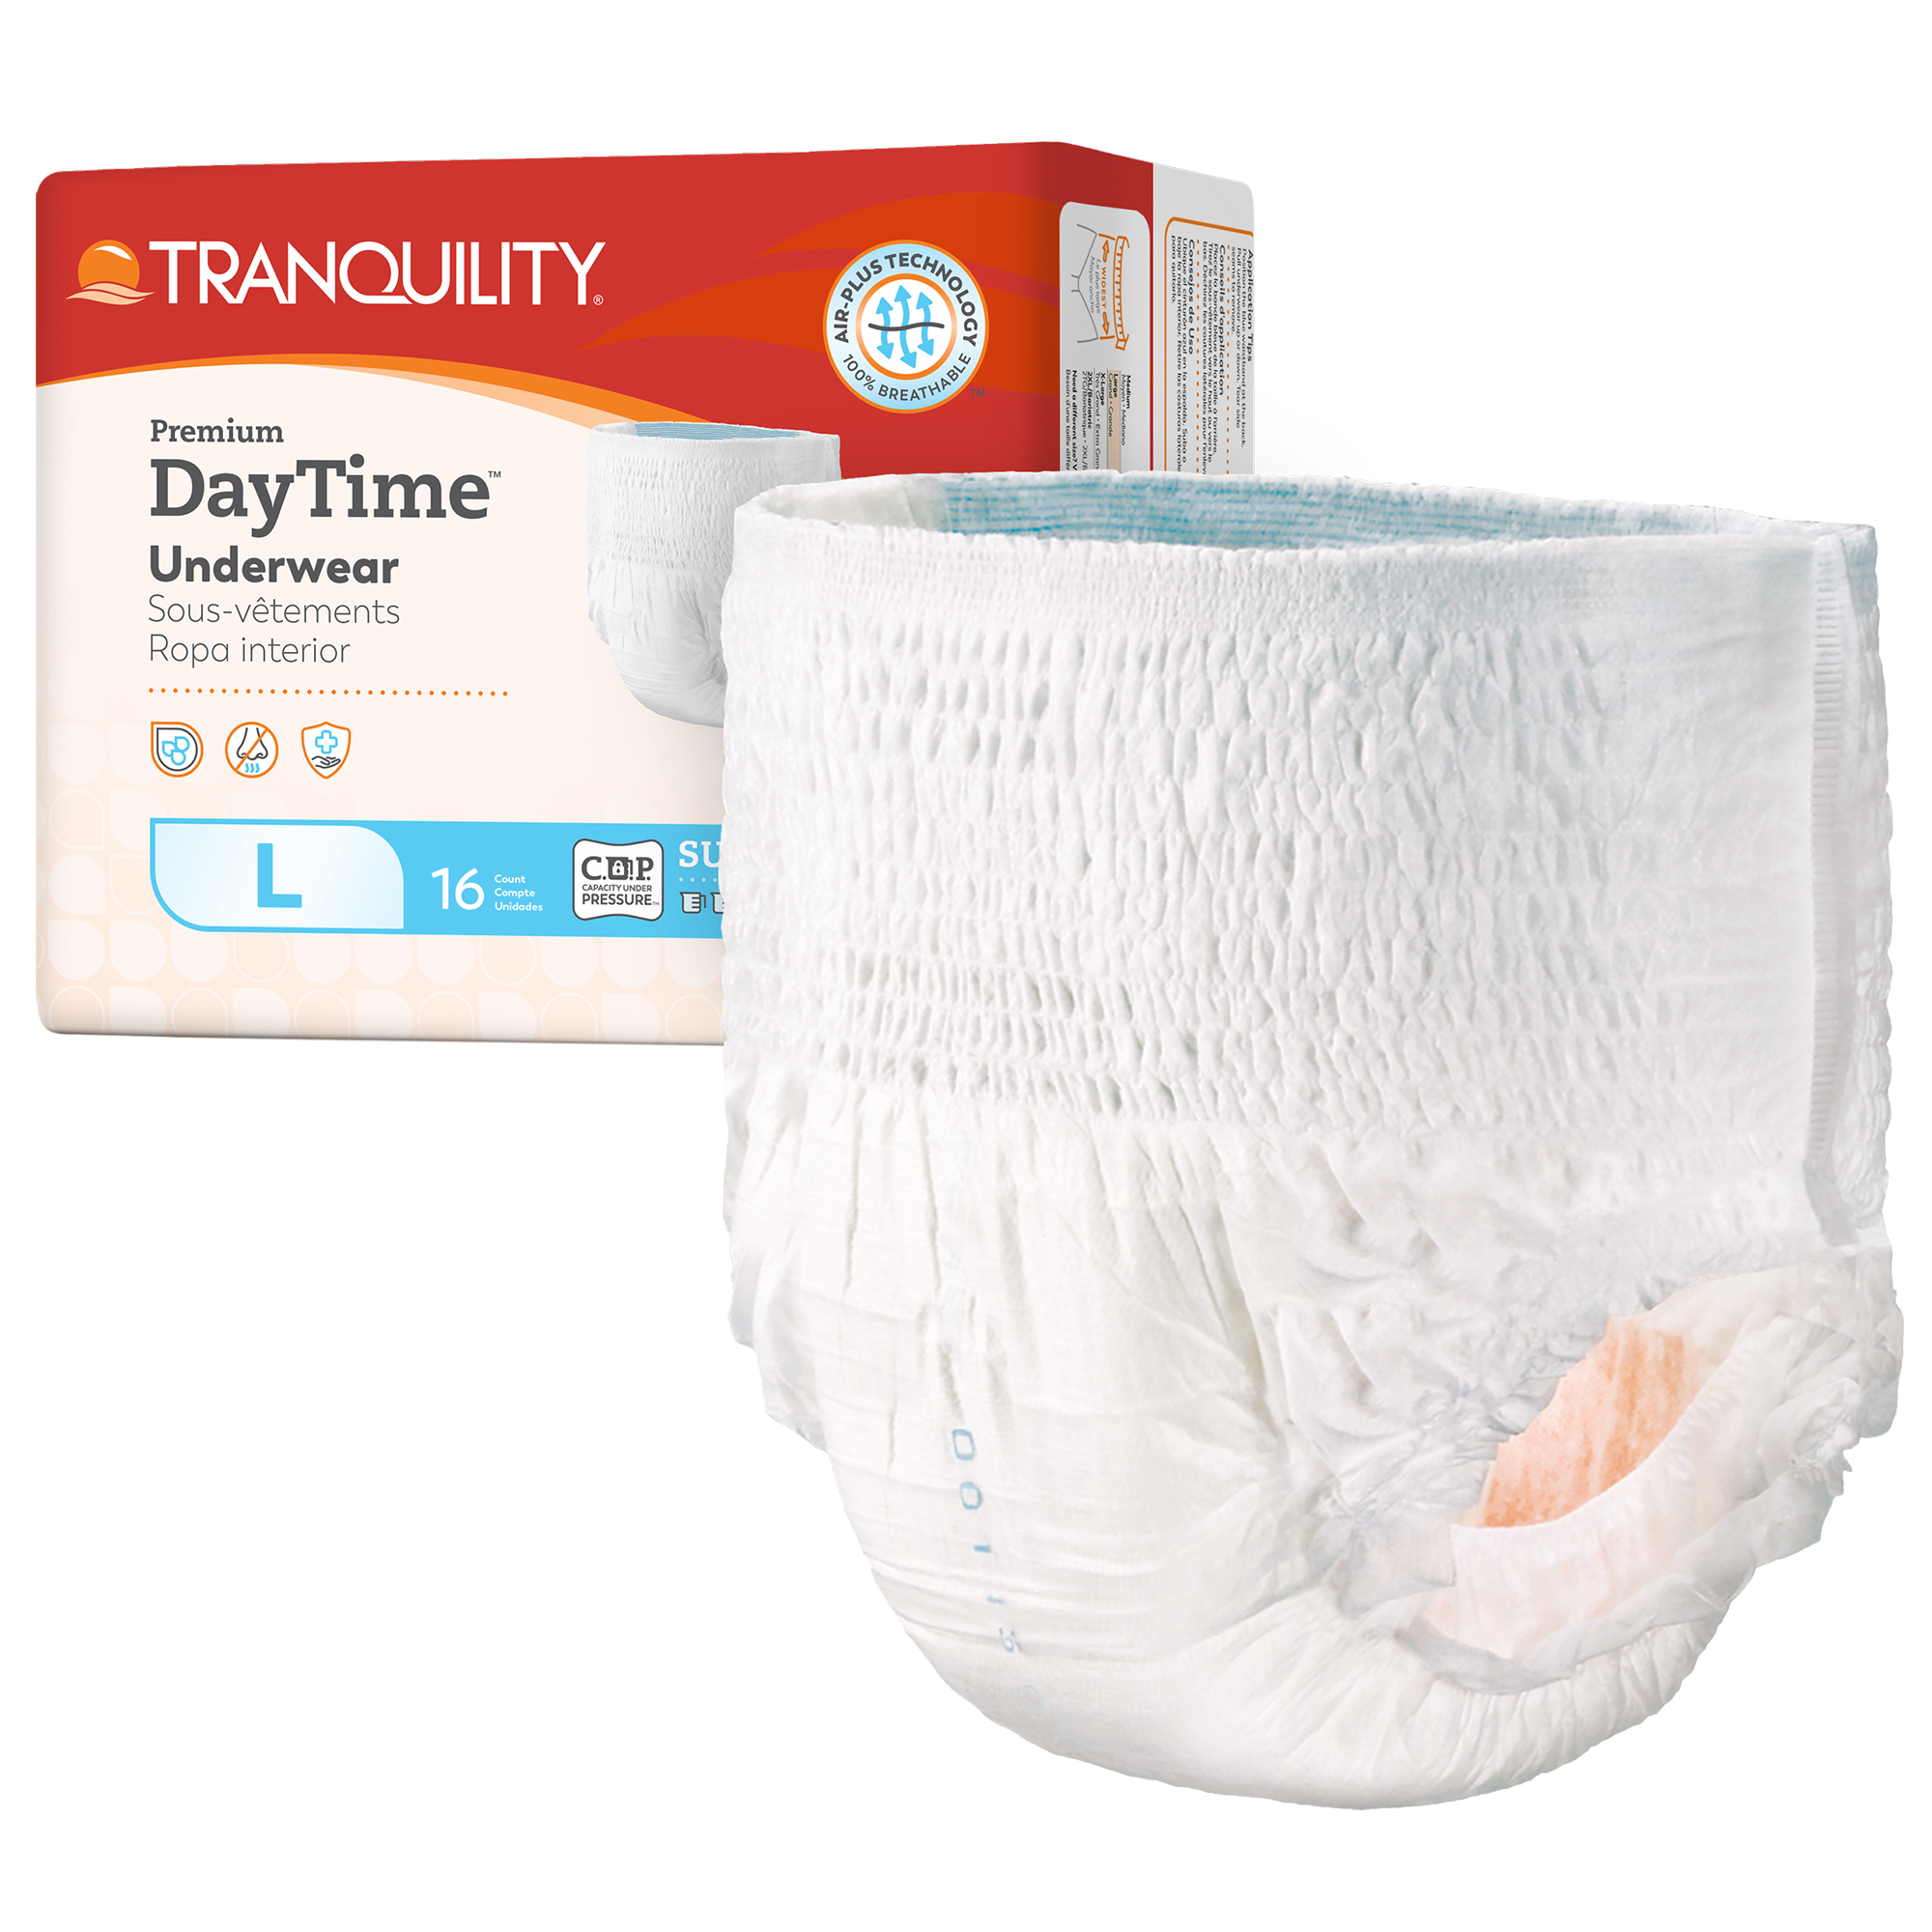 Tranquility Premium DayTime Disposable Absorbent Underwear, Heavy